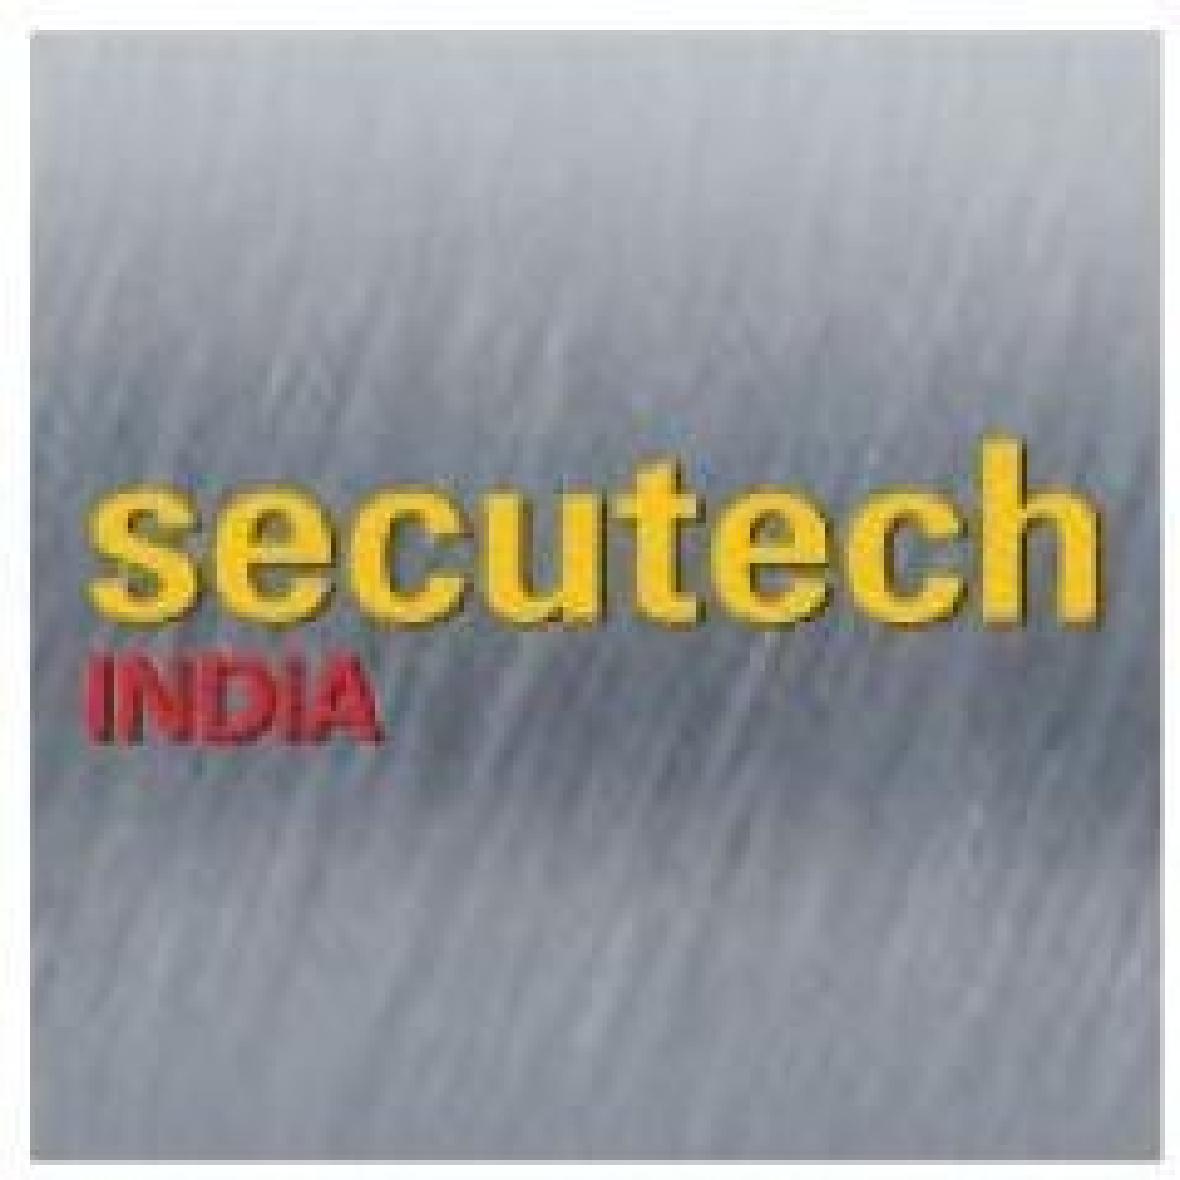 [Invitation] Secutech India 2019